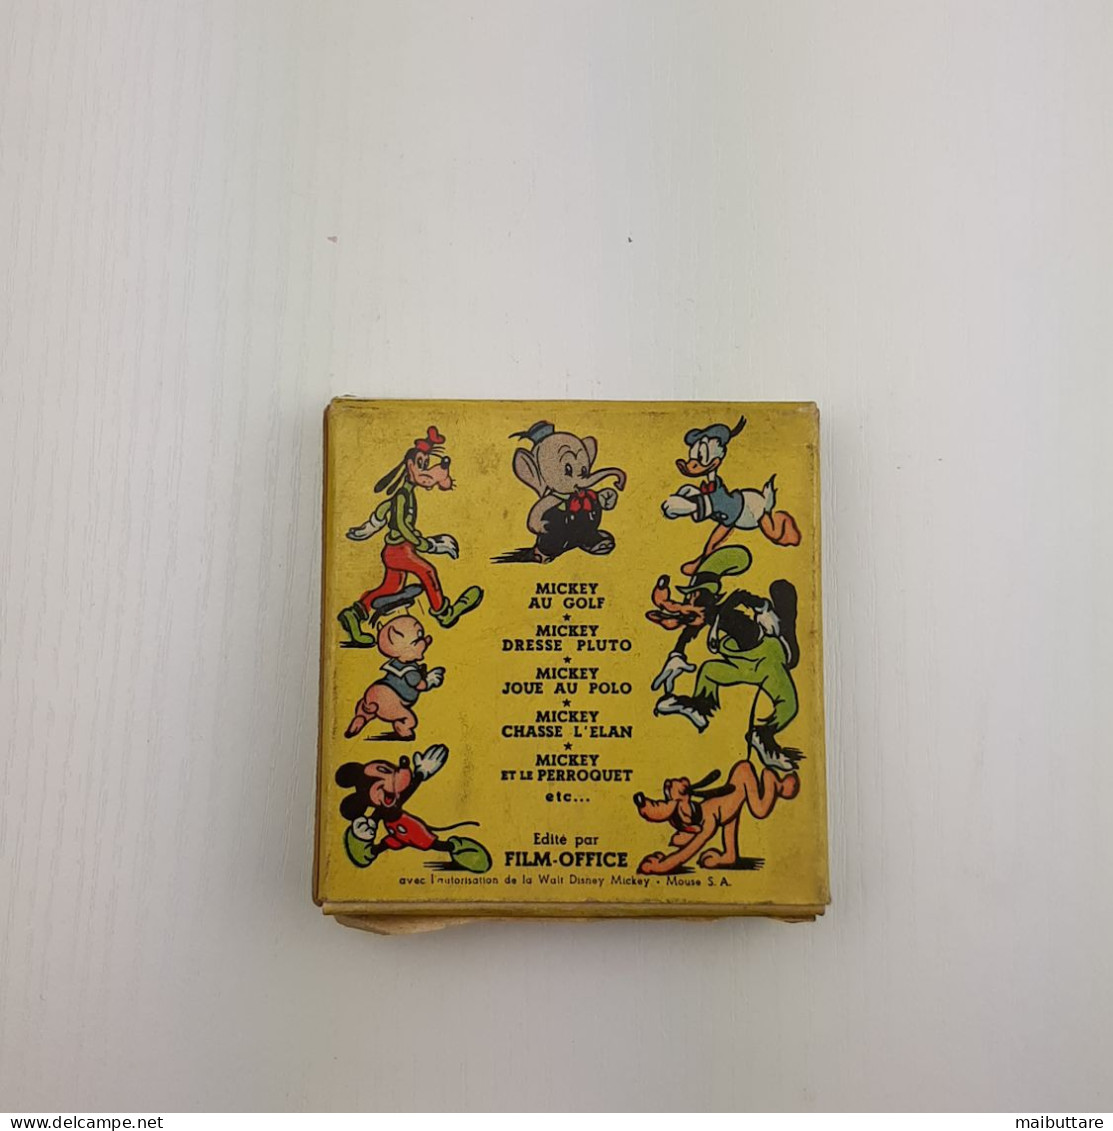 Antica Pellicola, Bobina Walt Disney 8mm "Topolino Al Golf" - Film Office Donald Est De Sortie Anno Pubblicazione 1964 - 35mm -16mm - 9,5+8+S8mm Film Rolls